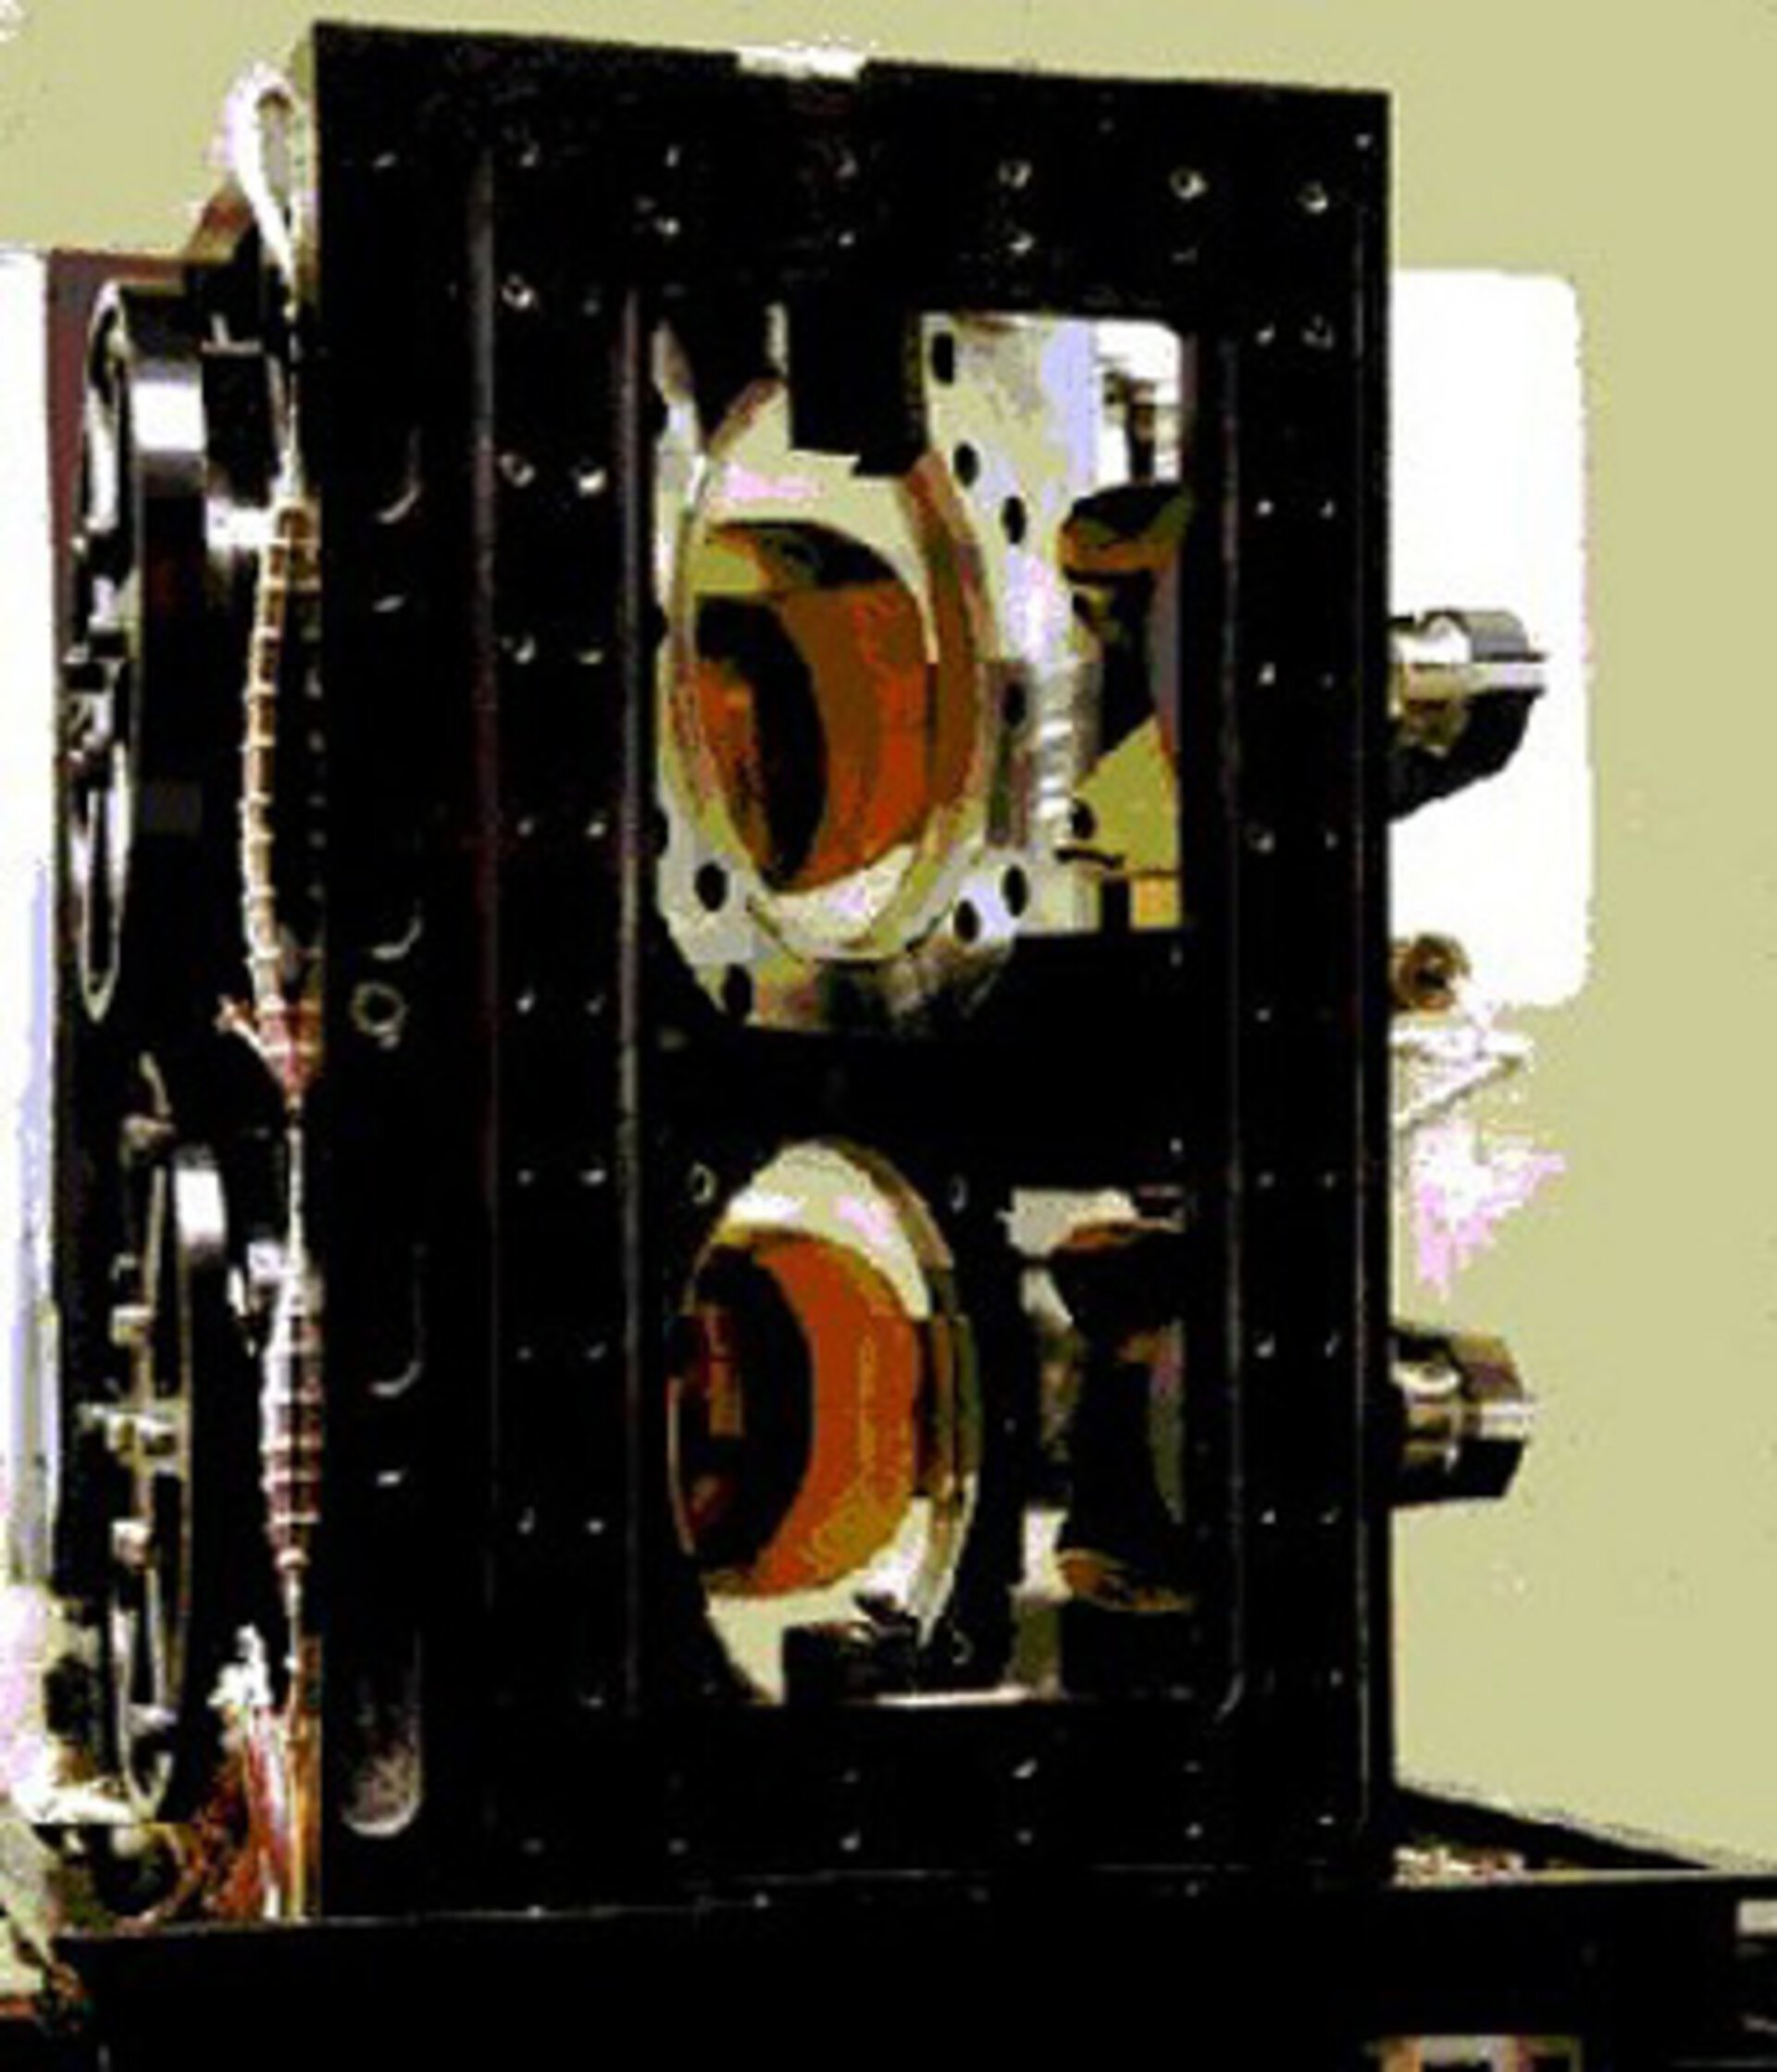 Das Planetary Fourier Spectrometer